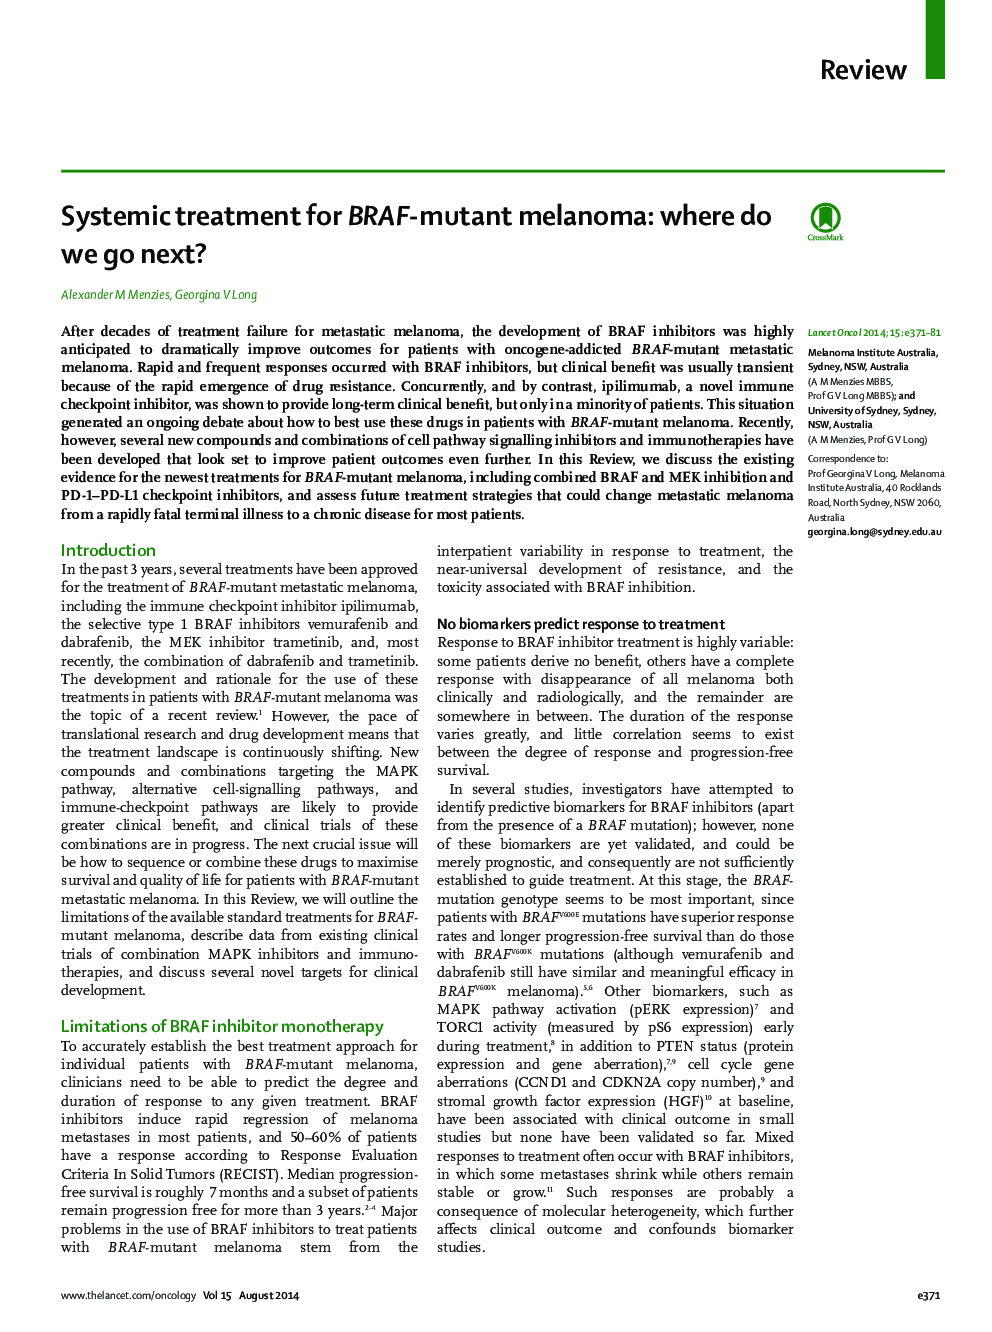 Systemic treatment for BRAF-mutant melanoma: where do we go next?